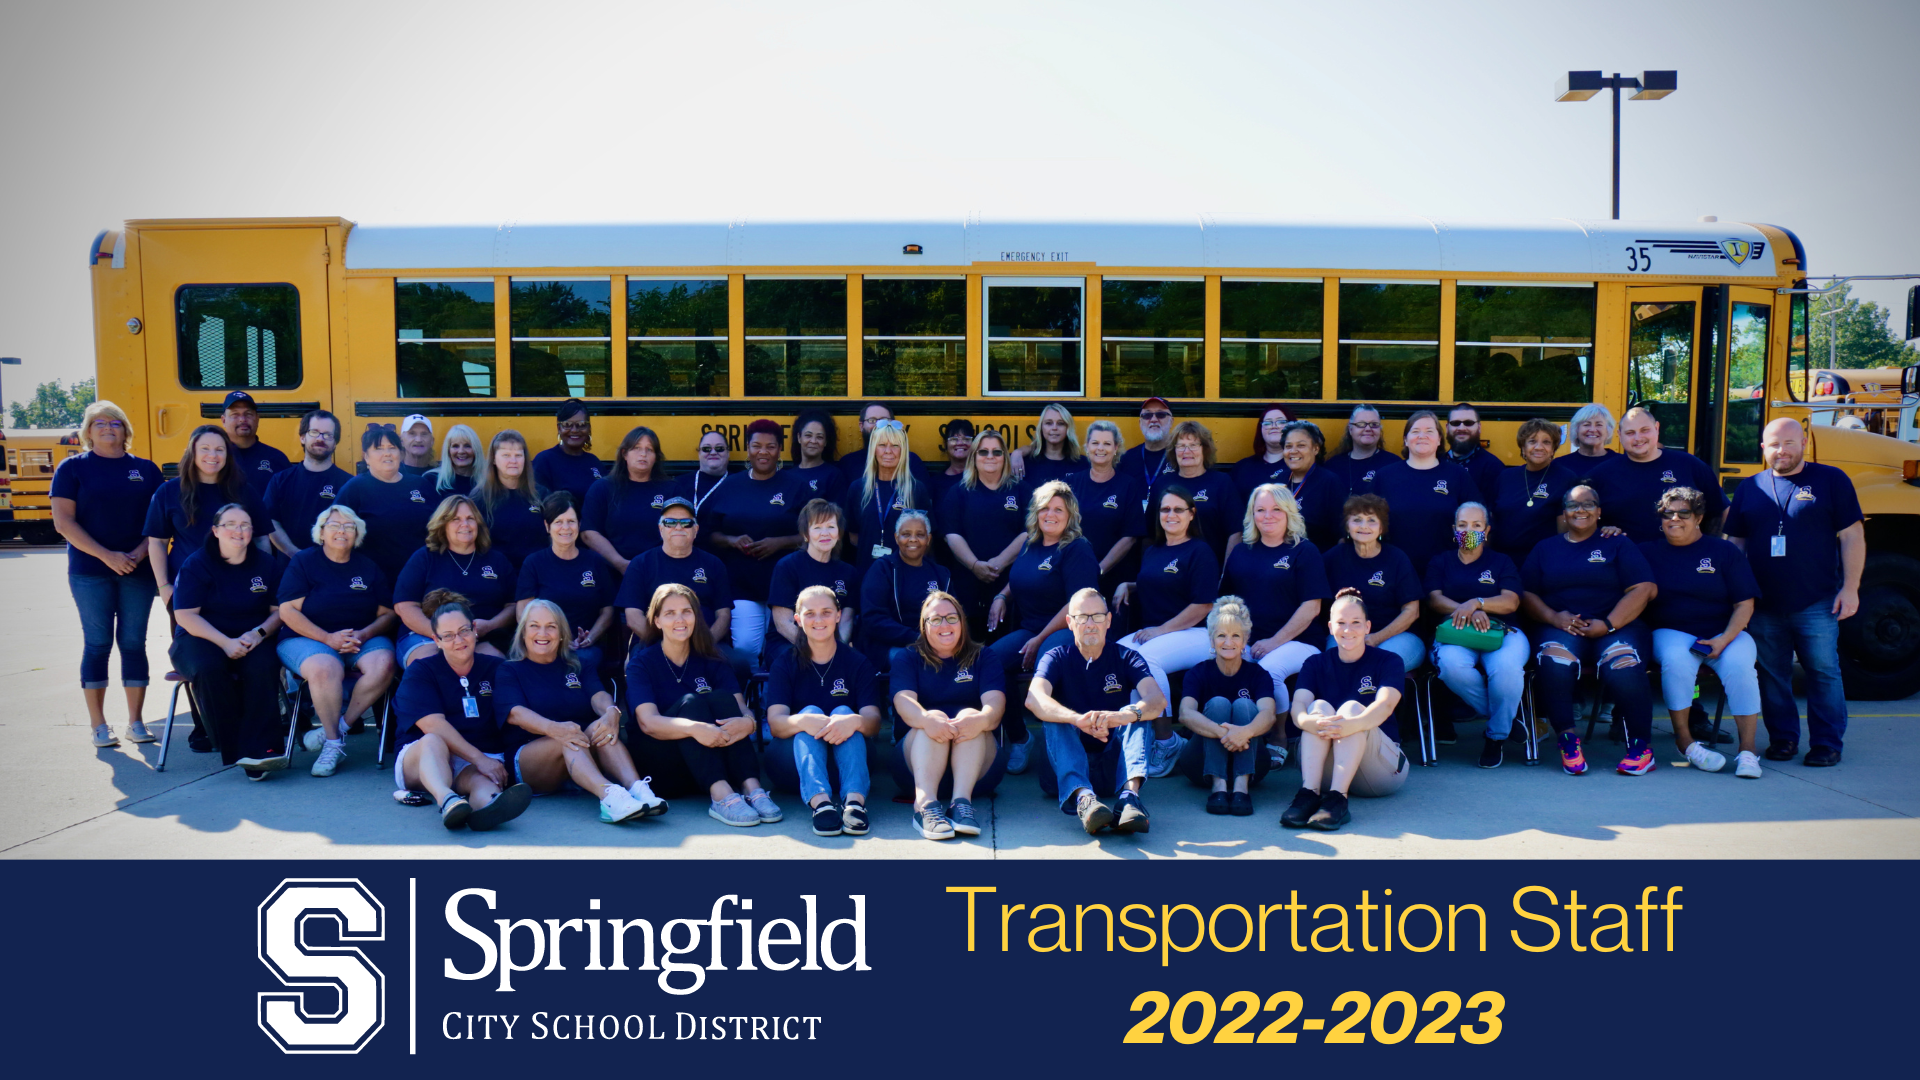 Transportation Staff Group Photo 2022-2023